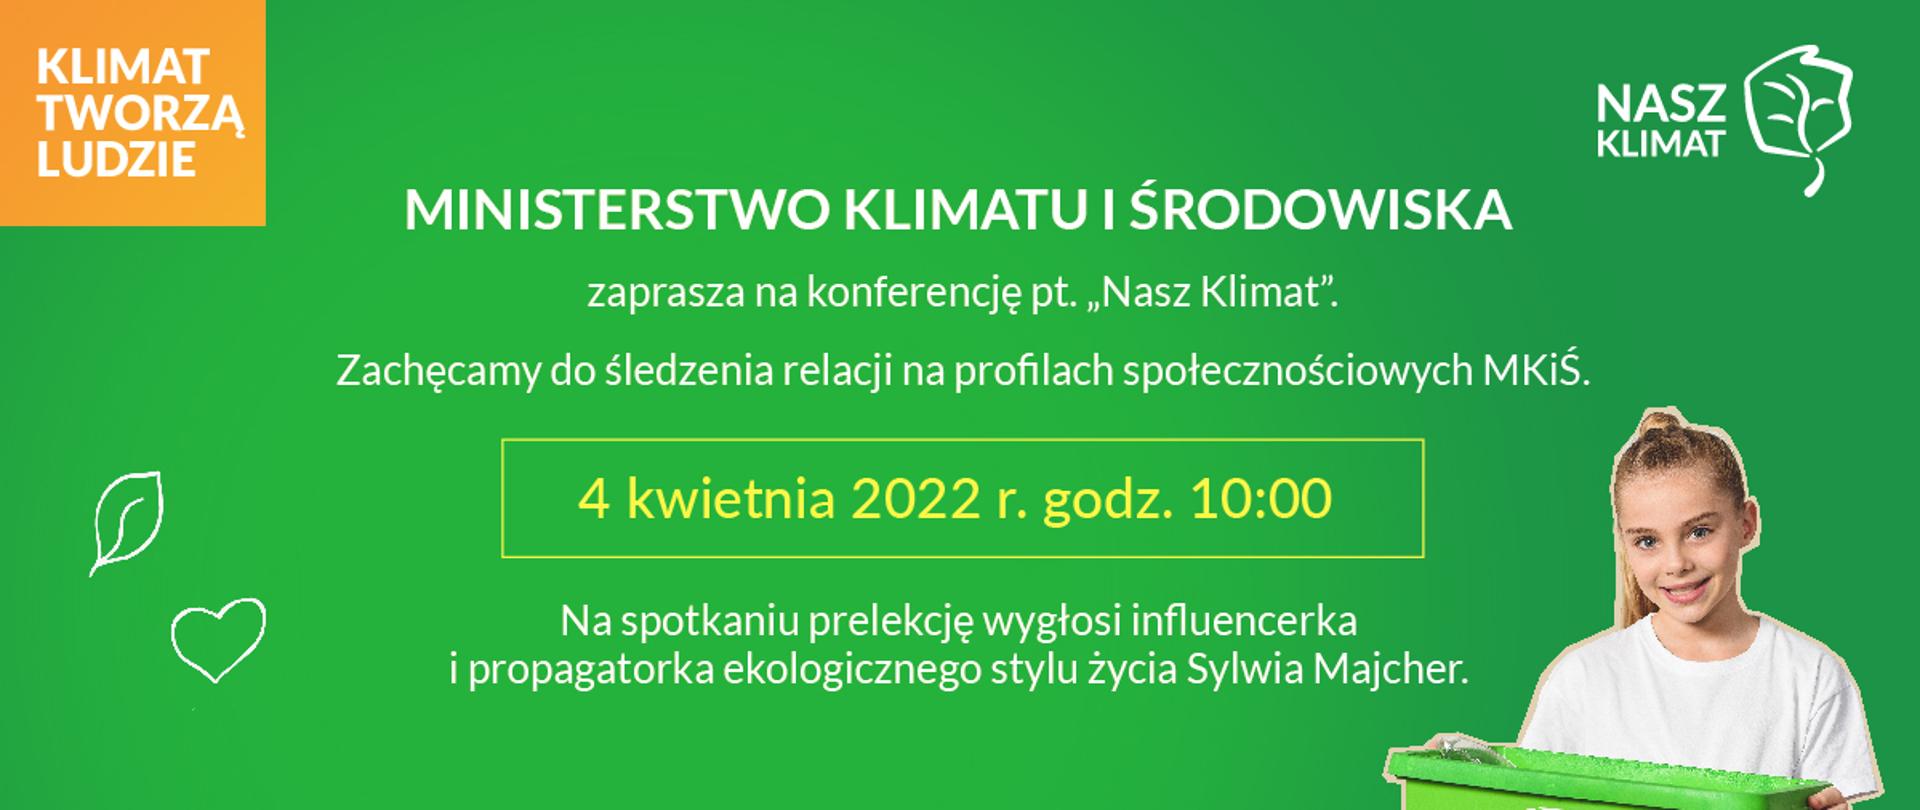 MKIS_naszklimat_konferencja_SM